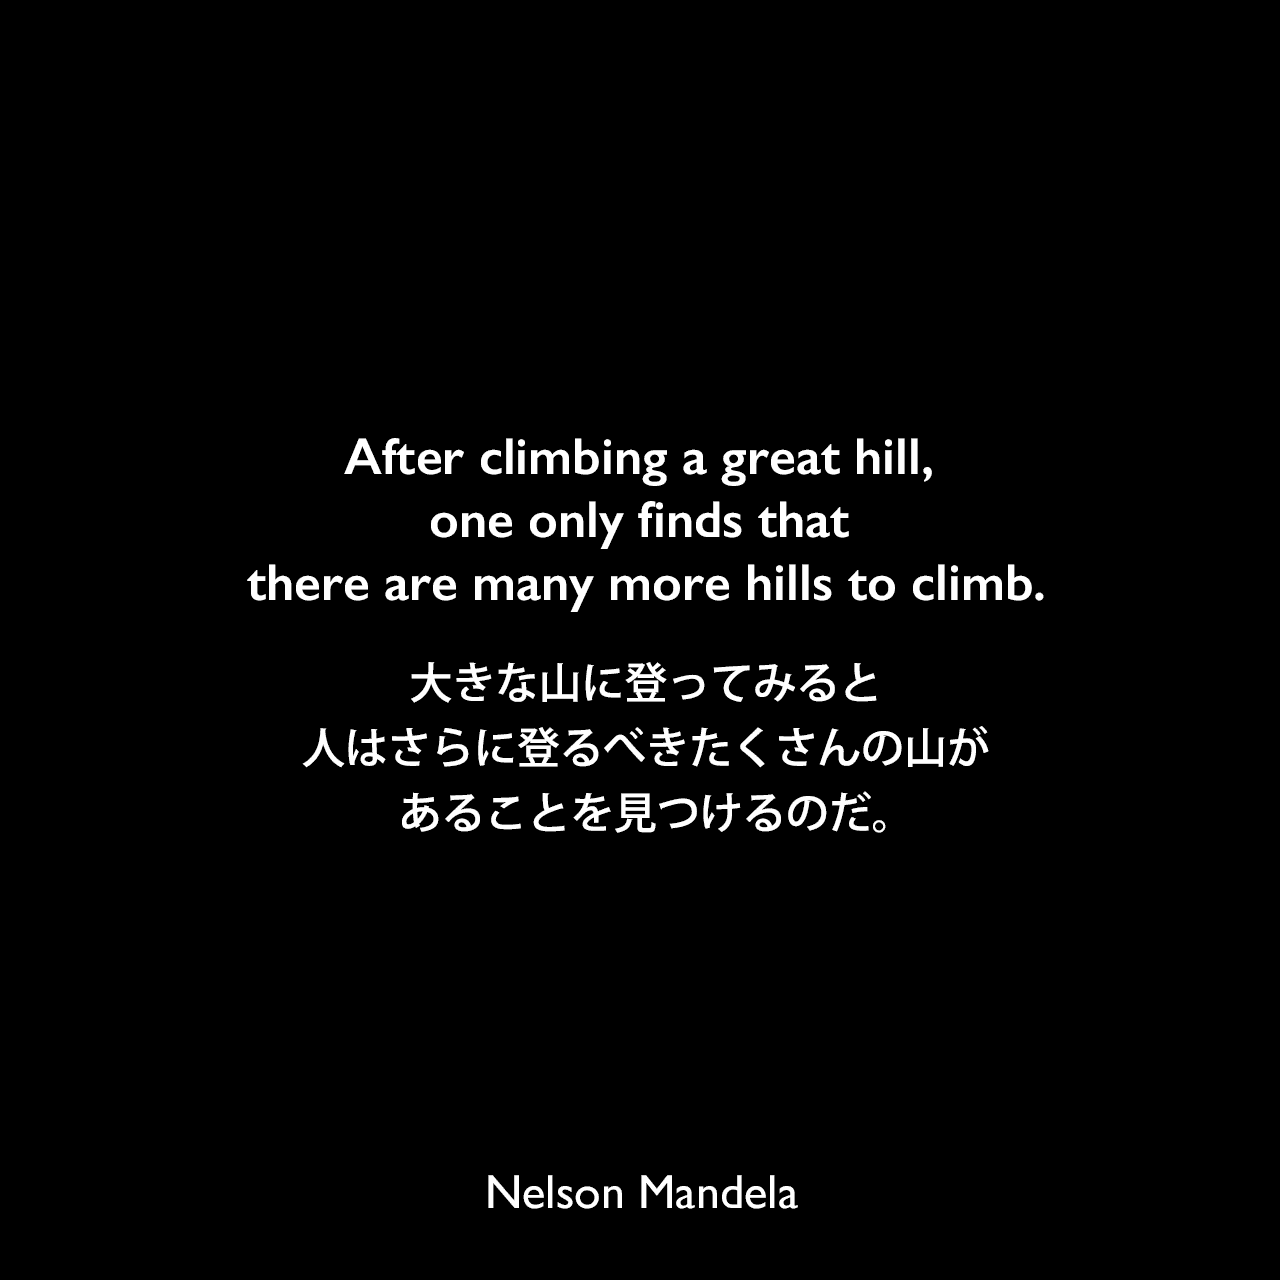 After climbing a great hill, one only finds that there are many more hills to climb.大きな山に登ってみると、人はさらに登るべきたくさんの山があることを見つけるのだ。- ネルソン・マンデラによる本「自由への長い道 ネルソン・マンデラ自伝」より